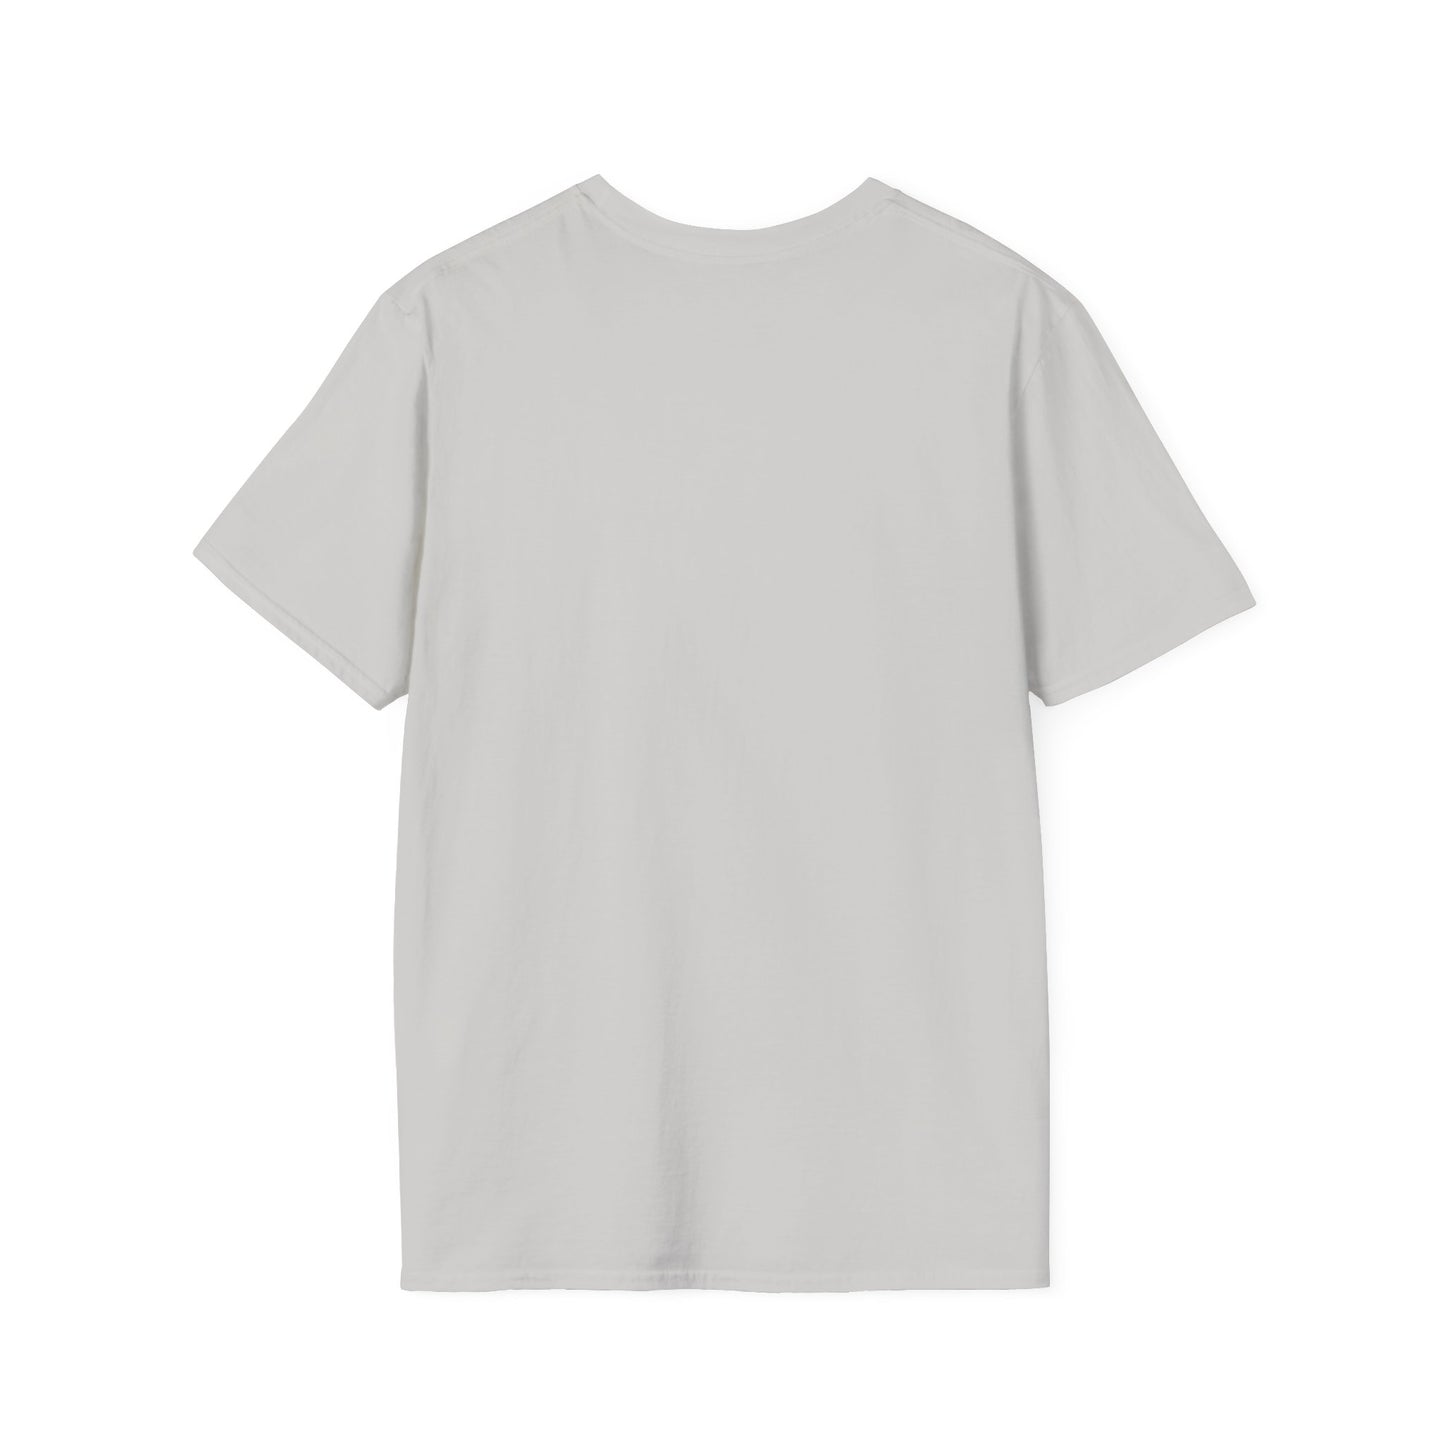 Unisex Softstyle T-Shirt - My USA - Colorado, Hawaii, New Hampshire, West Virginia, Wisconsin, Wyoming